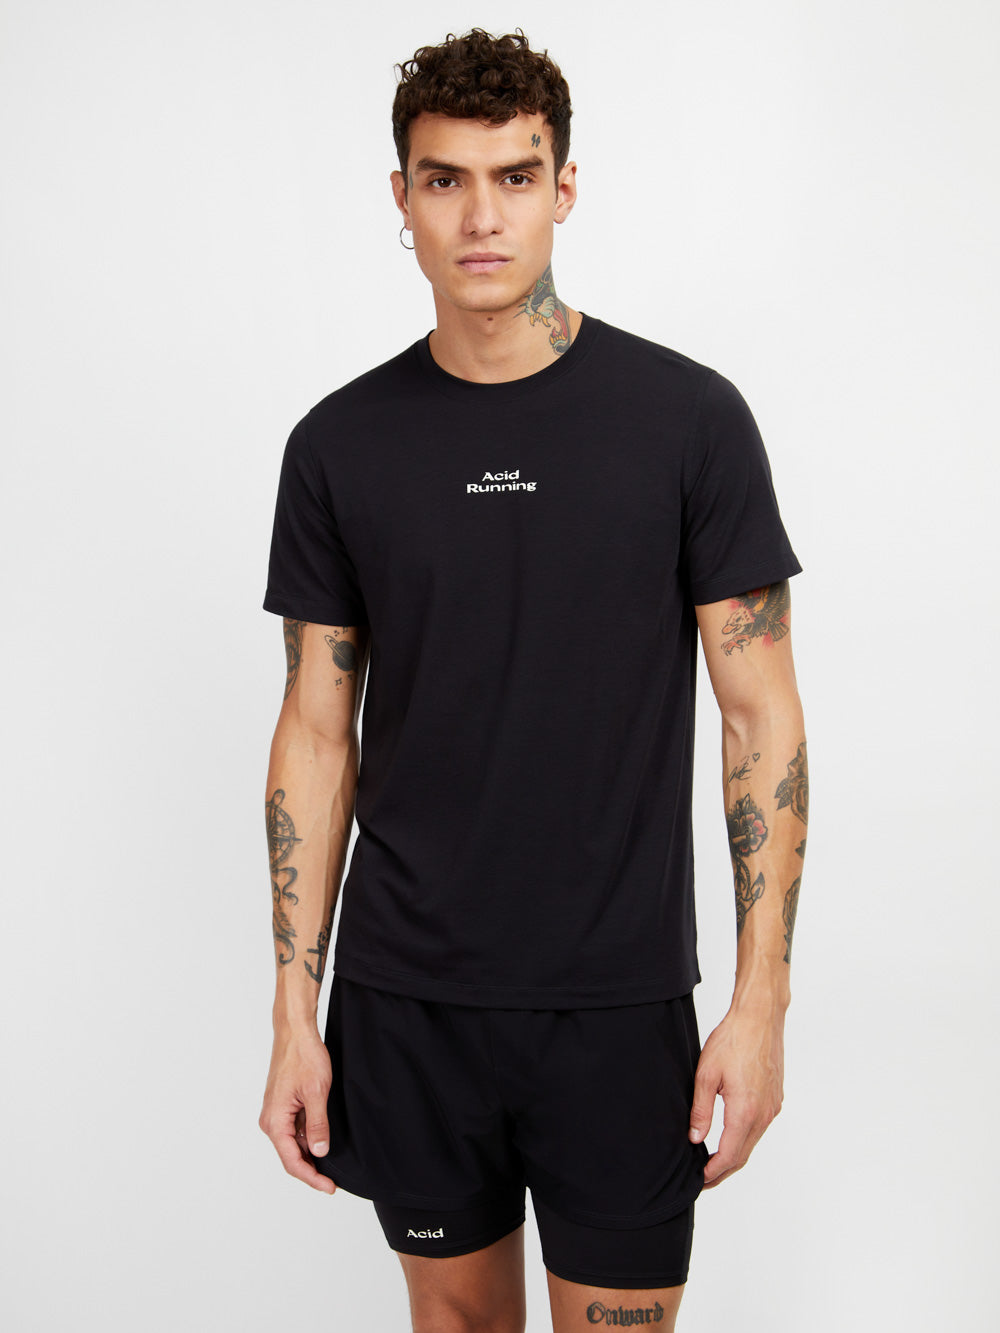 Acid Running Logo T-Shirt in Black - Sustainable Materials